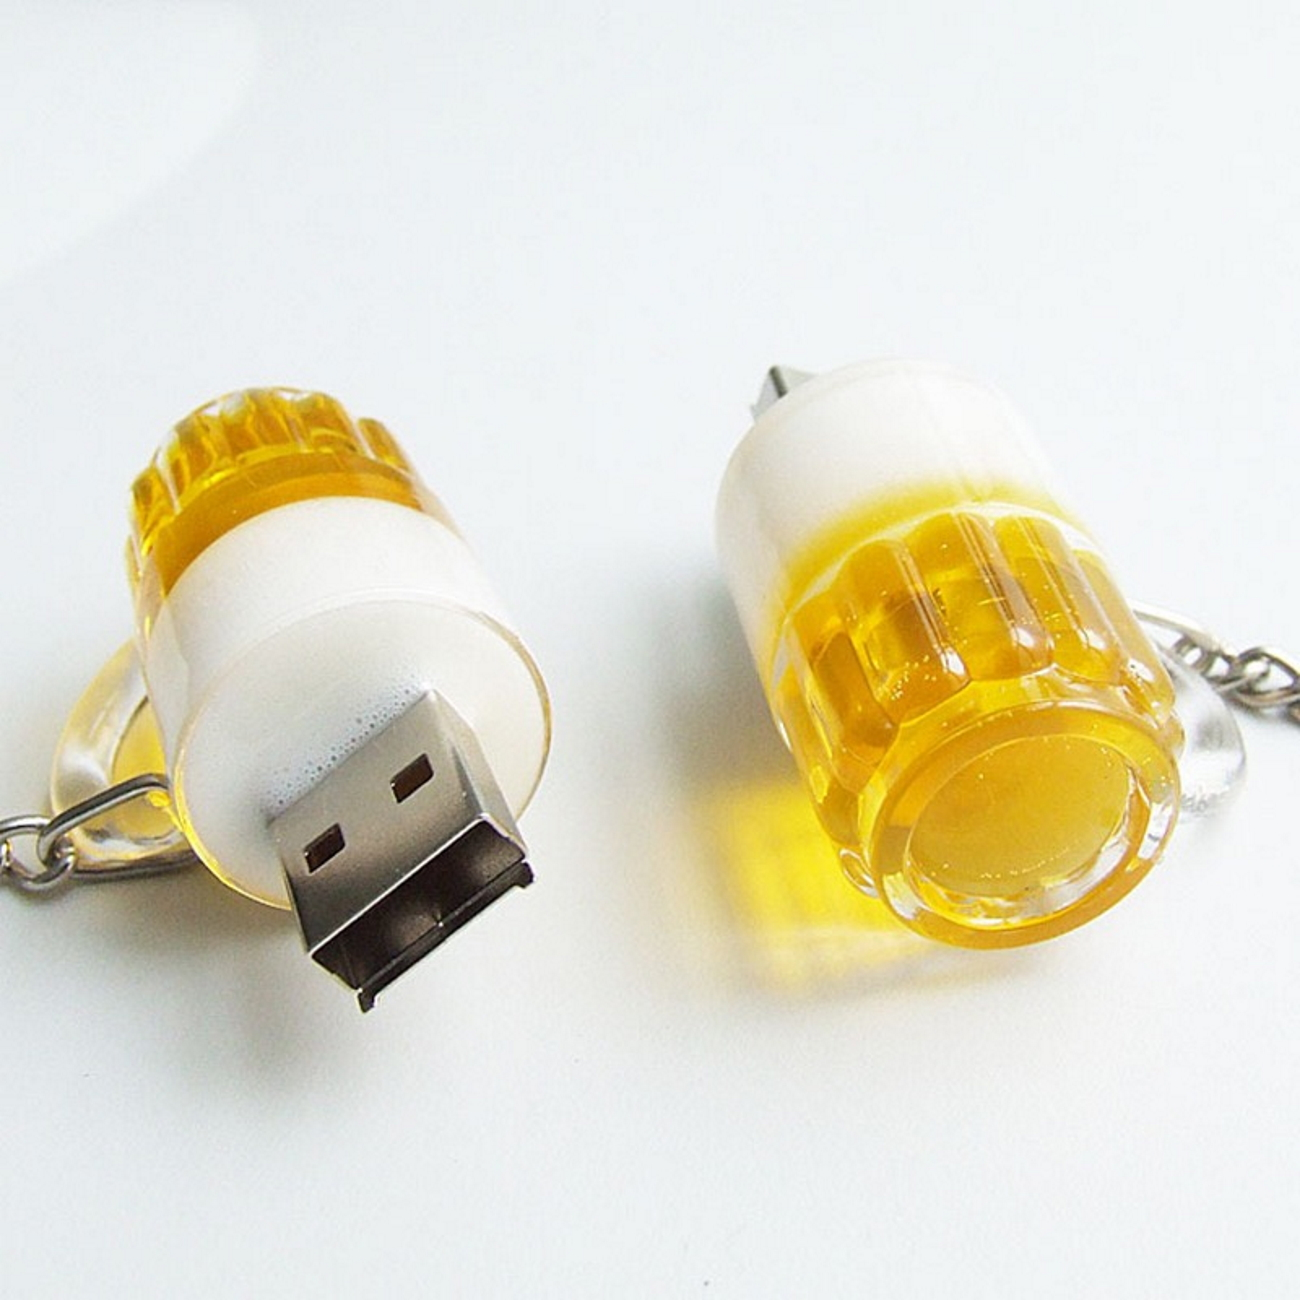 USB GERMANY USB-Stick ® 8 Bierkrug GB) (Mehrfarbig